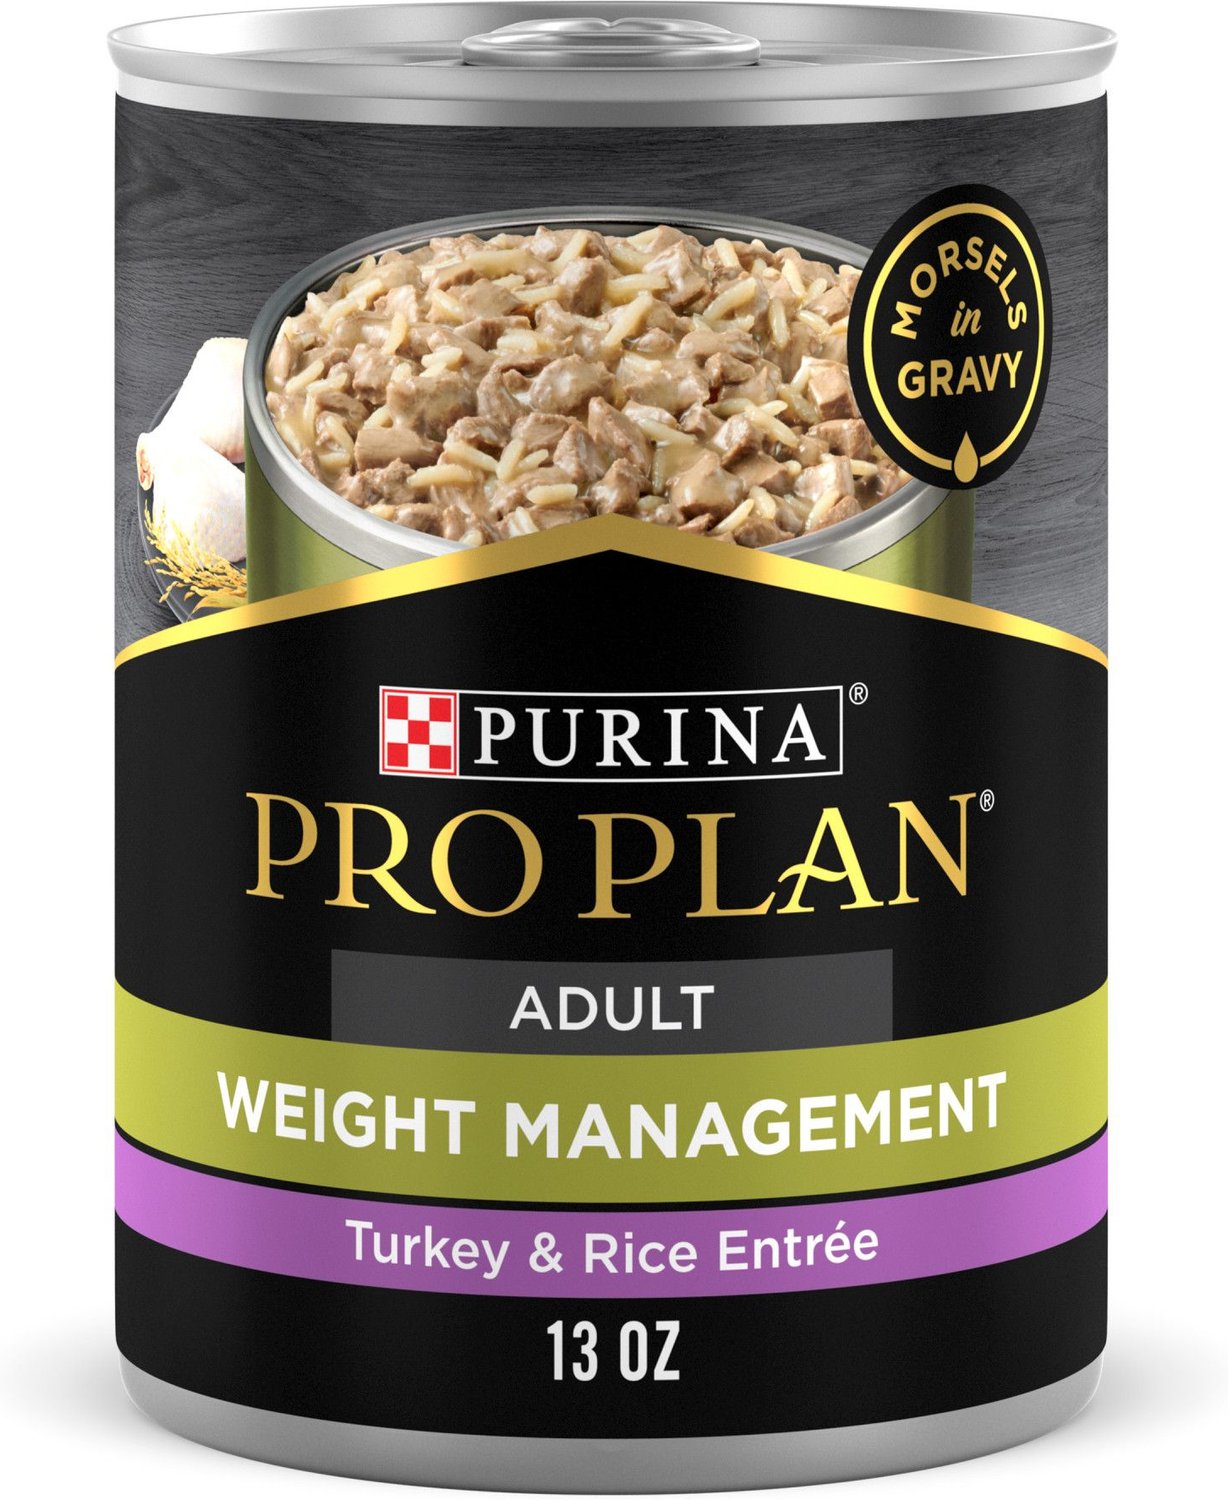 purina pro plan weight management